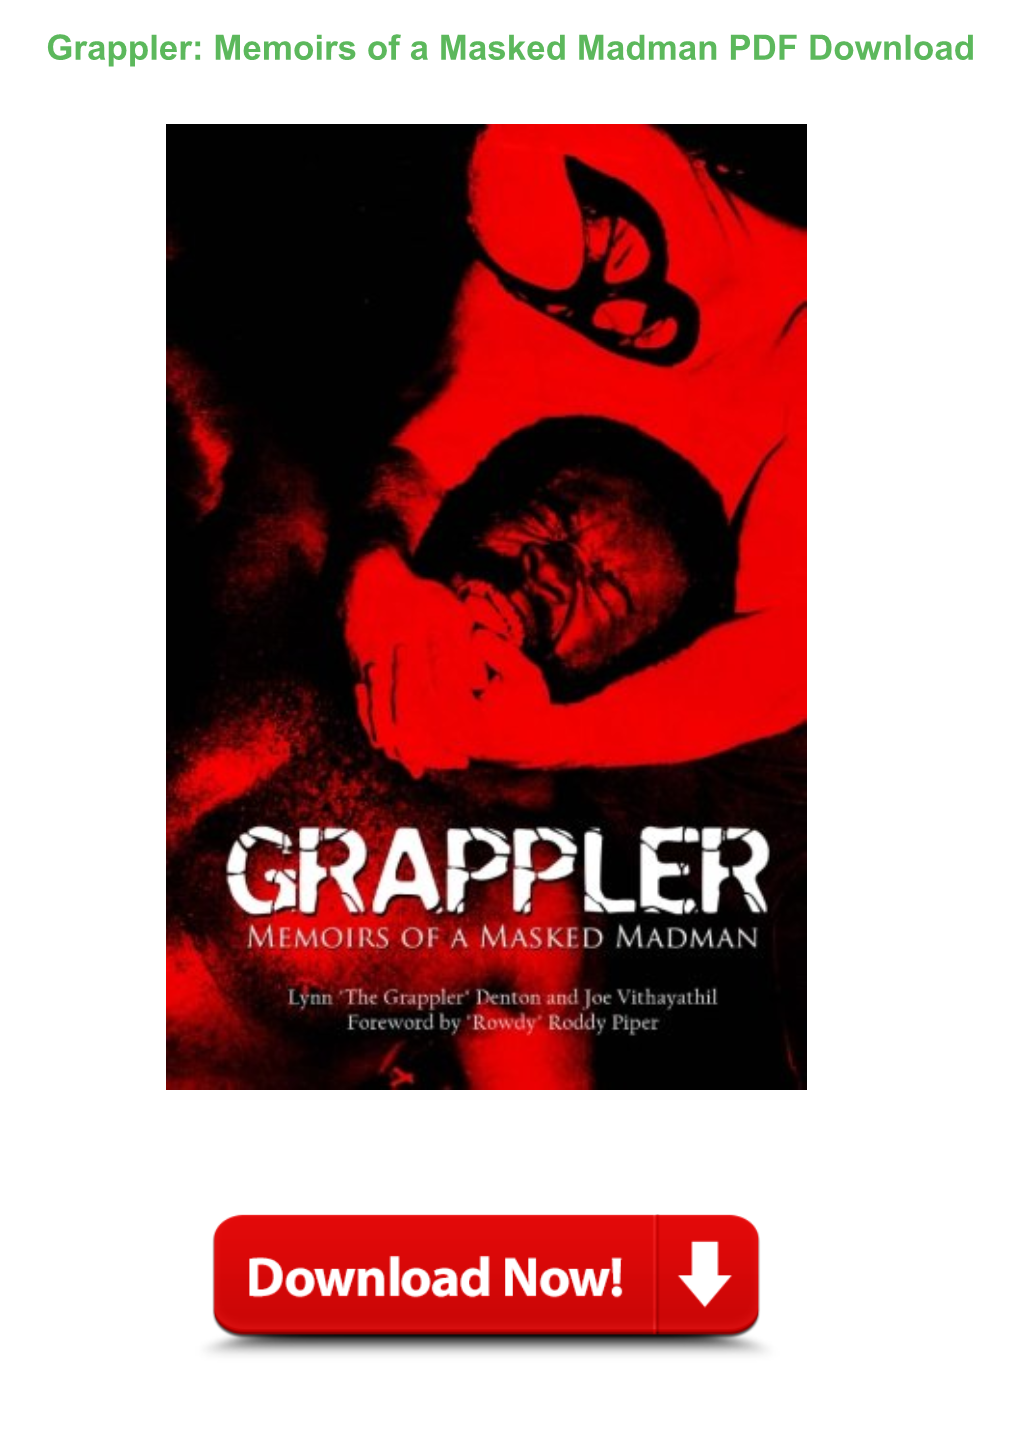 Grappler: Memoirs of a Masked Madman PDF Download Book Description